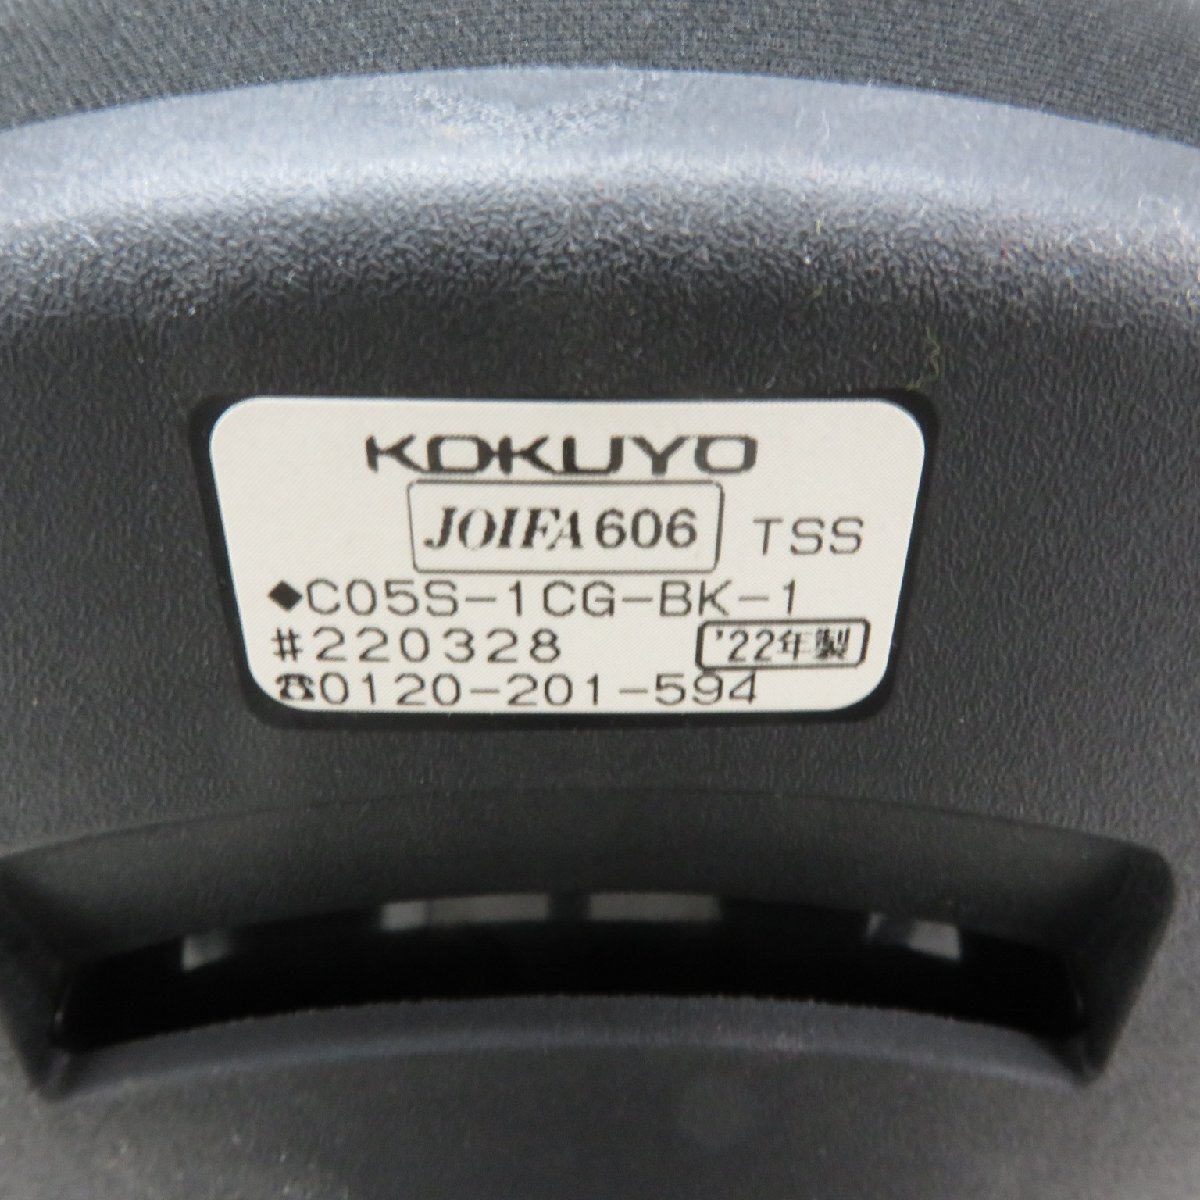 KOKIYO コクヨ ingLIFE イングライフ C05S-1CG-BK-1 肘付オフィスチェア ブラック/ナチュラル グライディング EG13125 中古オフィス家具 配_画像10